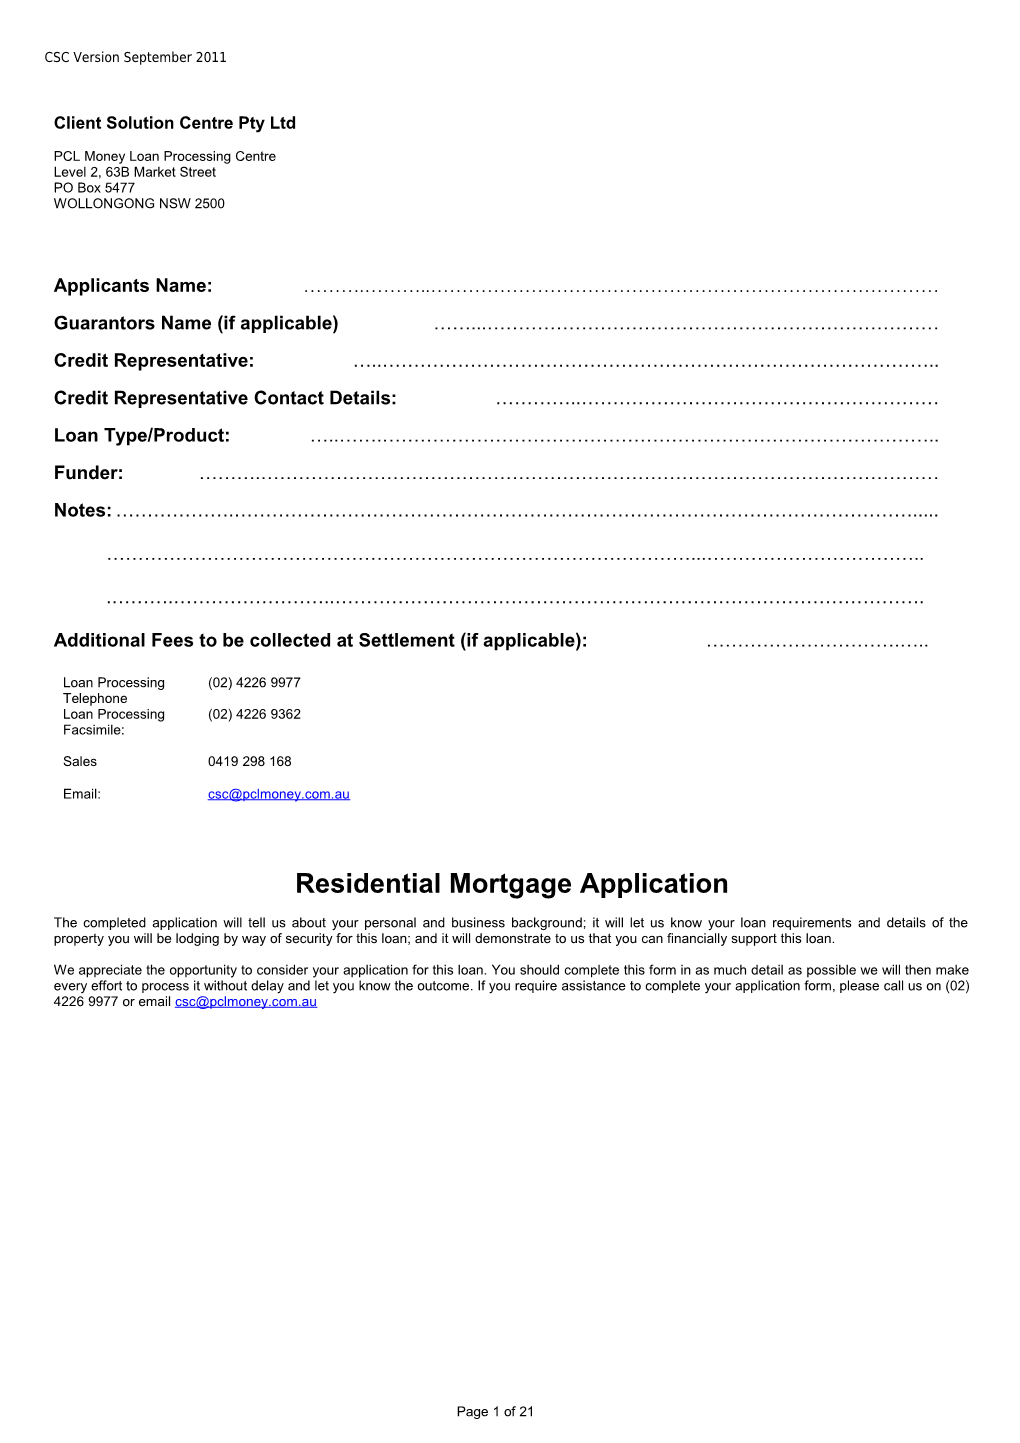 Loan Application Summary & Application